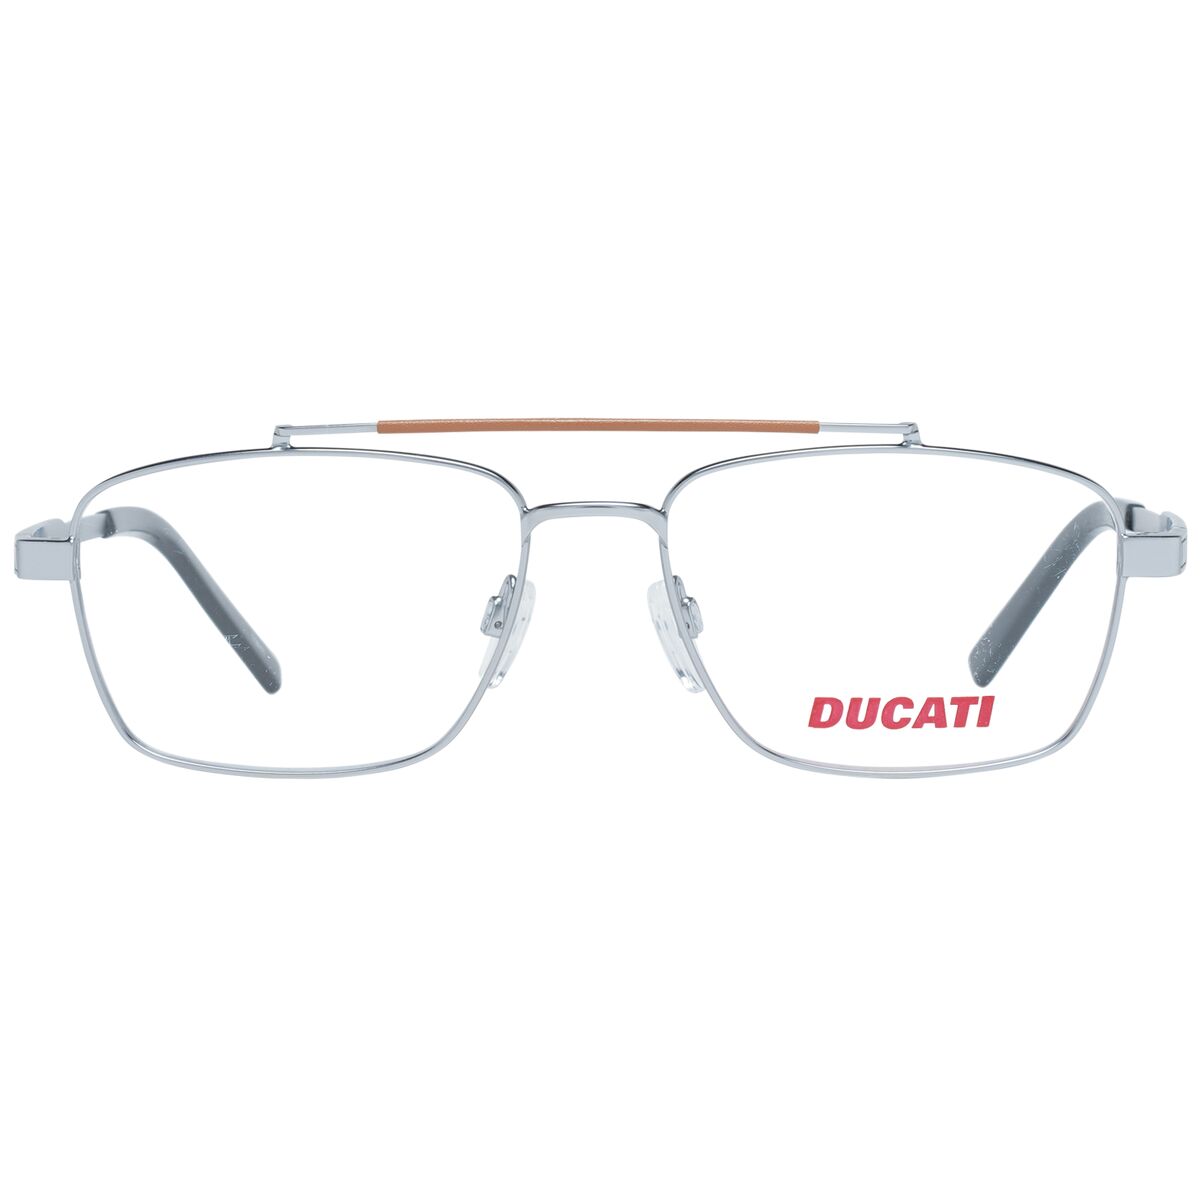 Kaufe Brillenfassung Ducati DA3019 54910 bei AWK Flagship um € 67.00